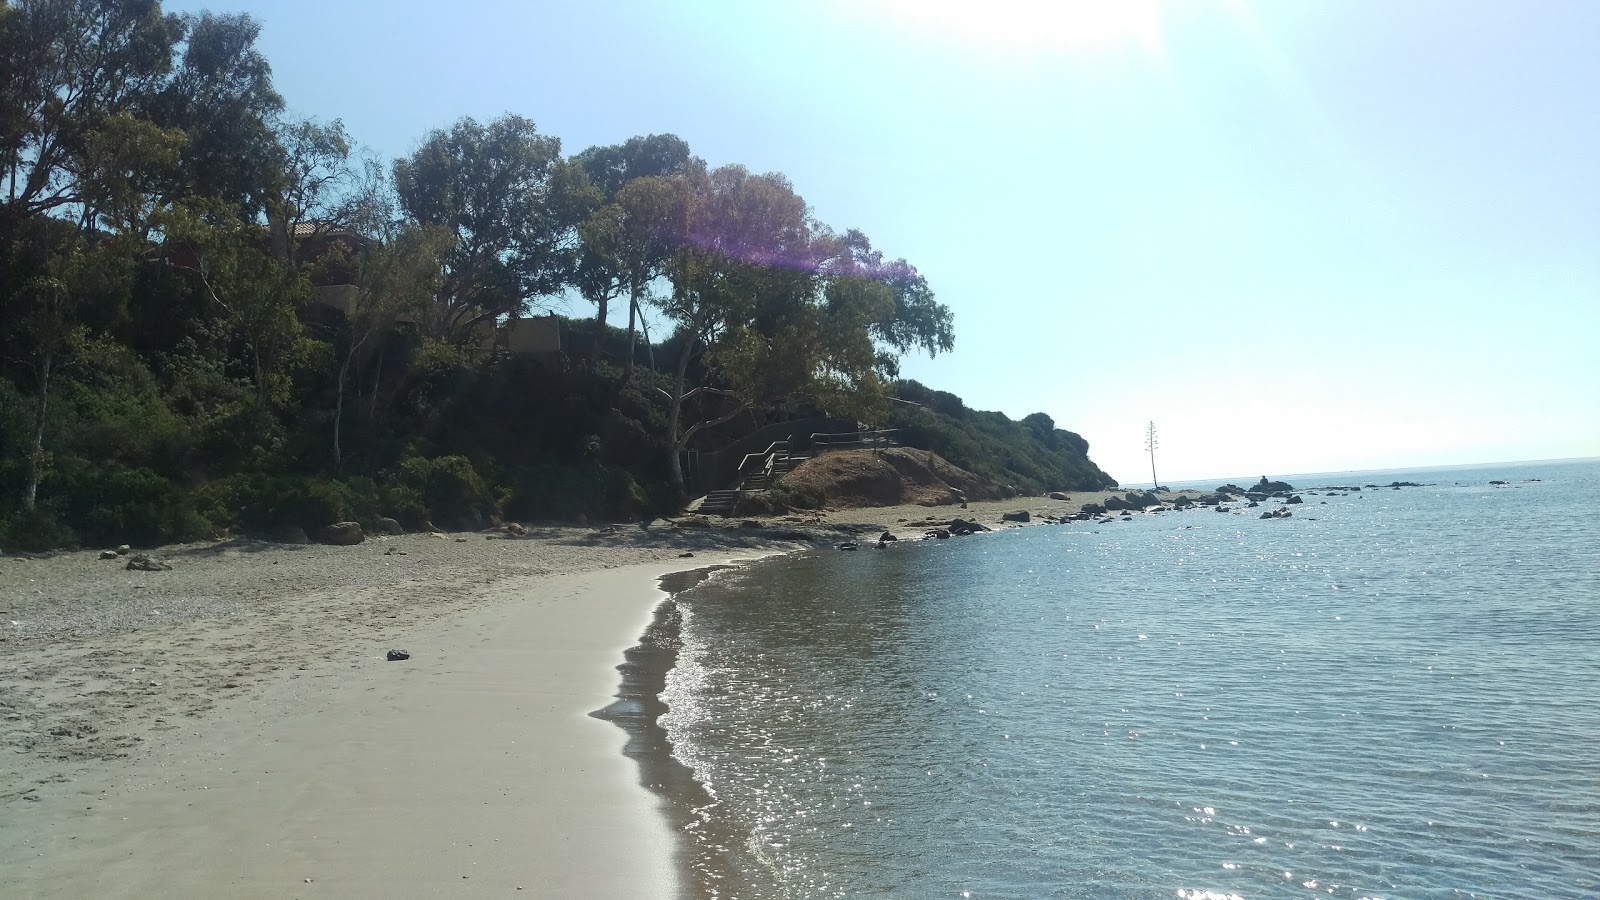 Foto di Playa Limite Cadiz, Malaga con una superficie del sabbia grigia